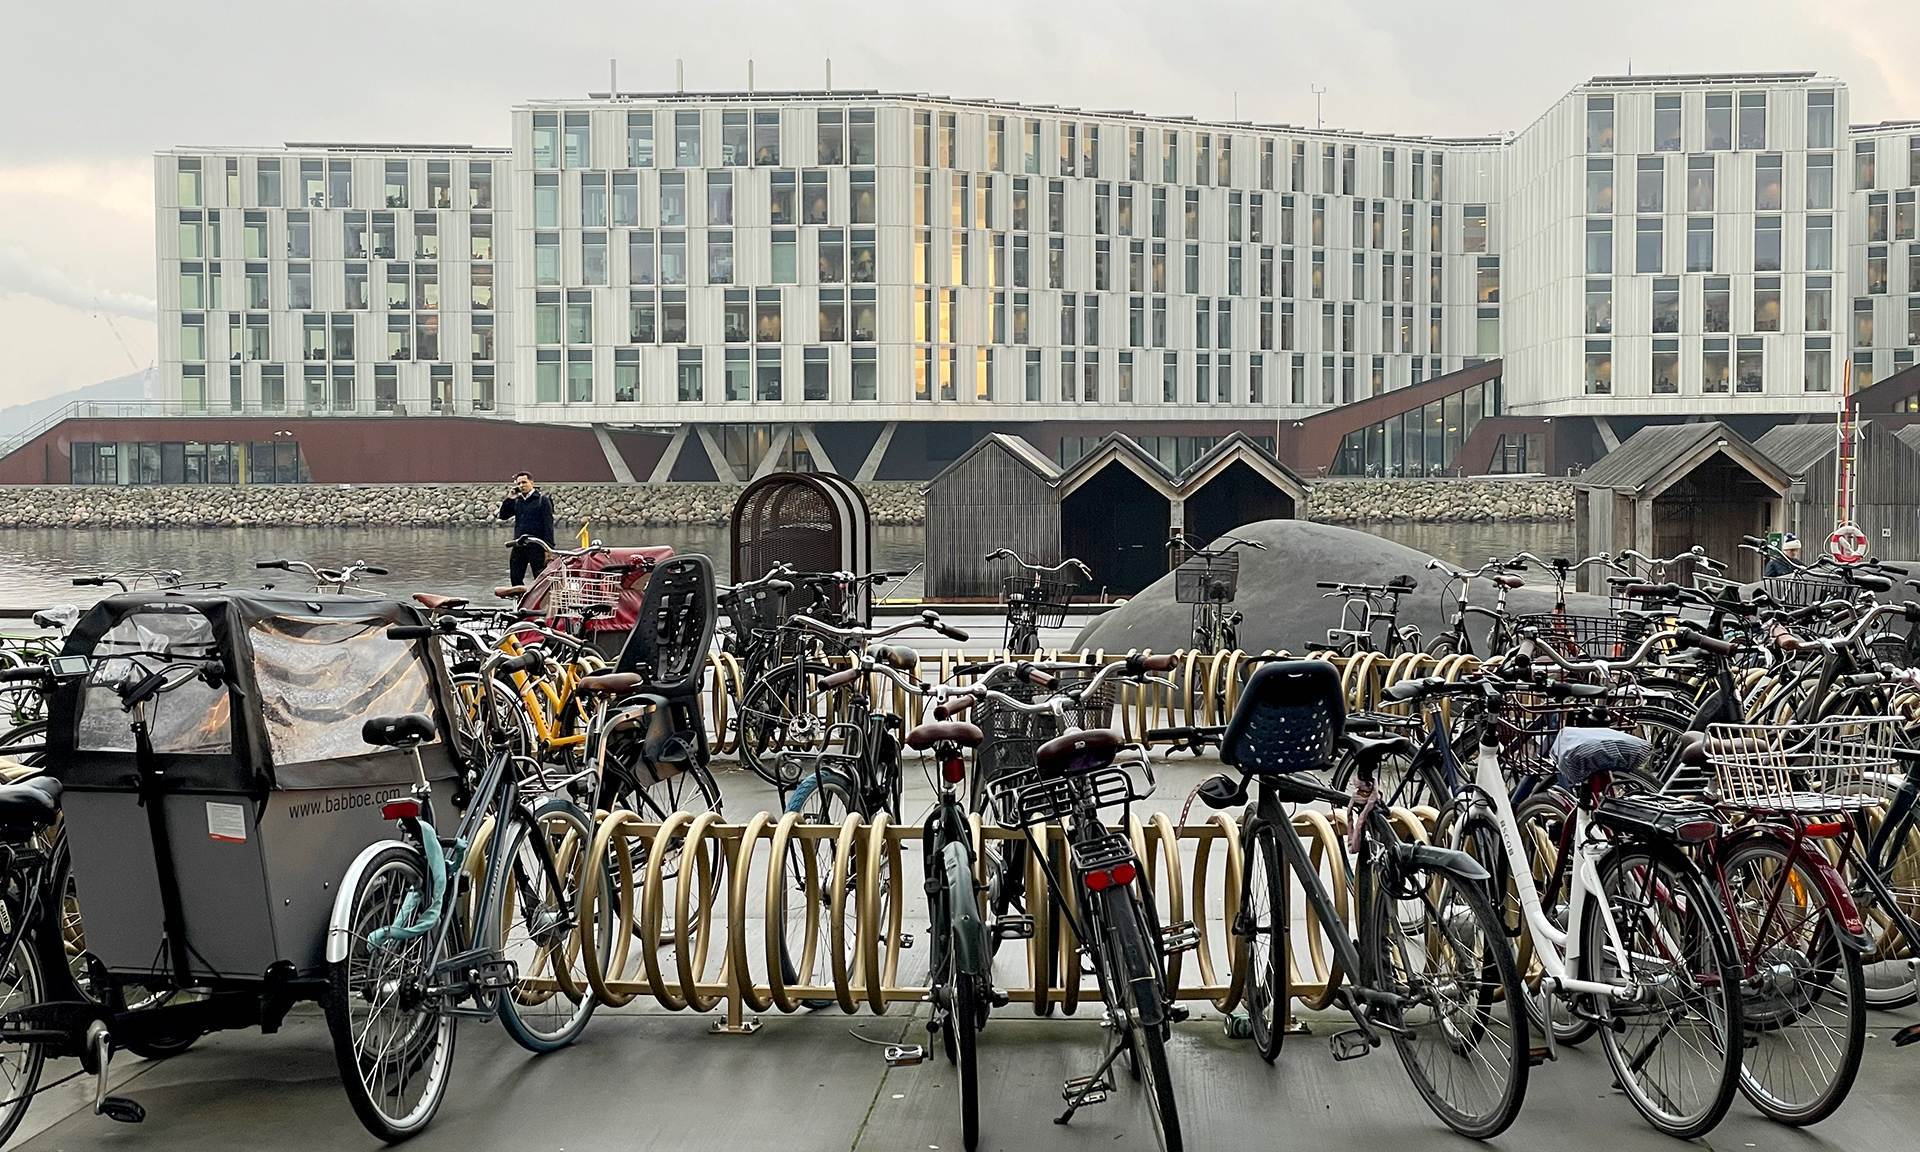 Universität der Vereinten Nationen in Nordhavn, Kopenhagen.